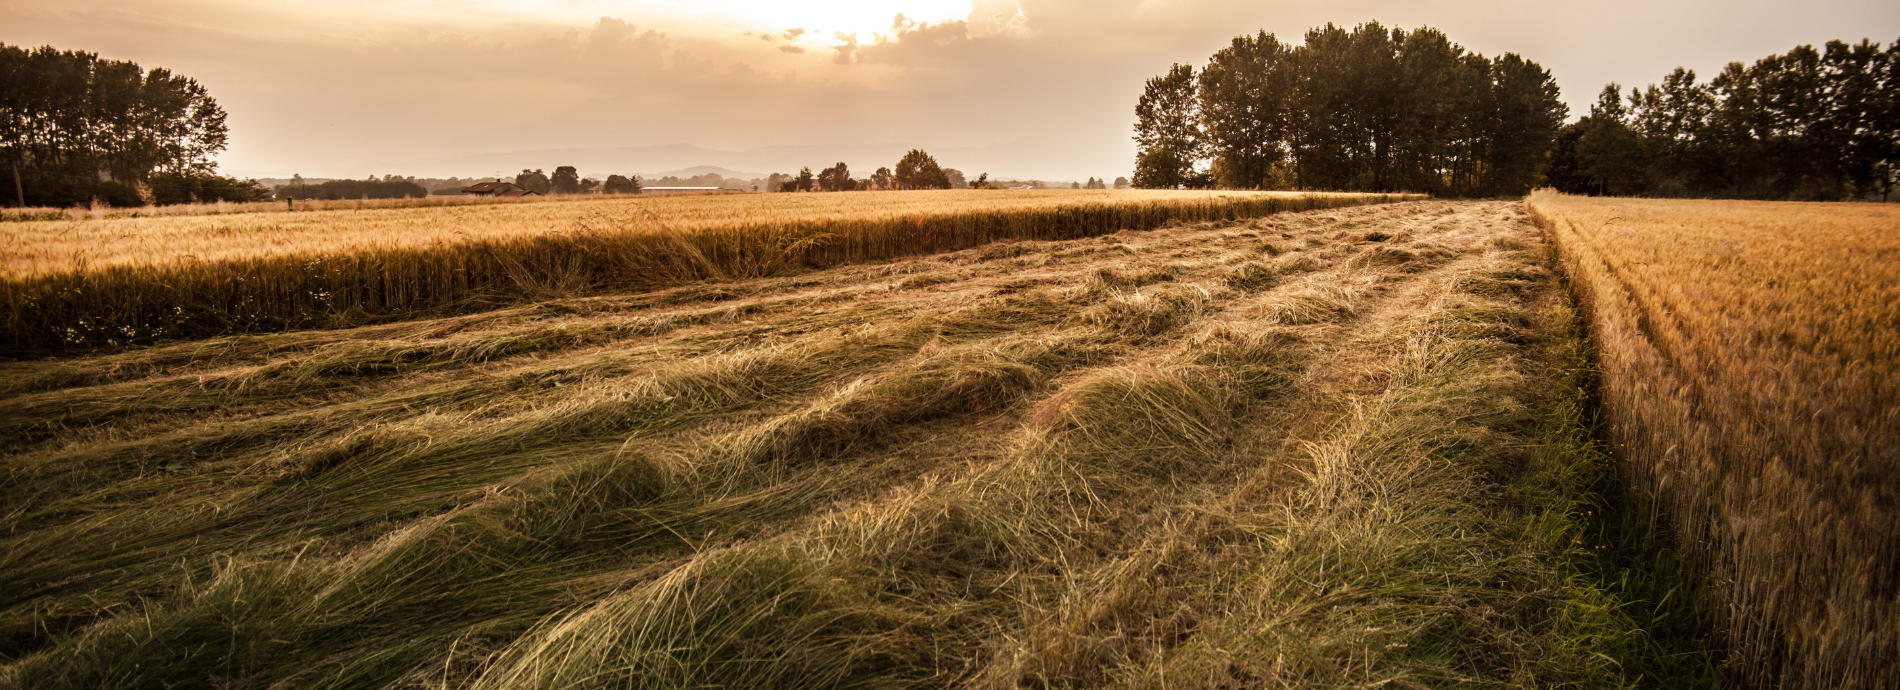 Photo of Wheat Field